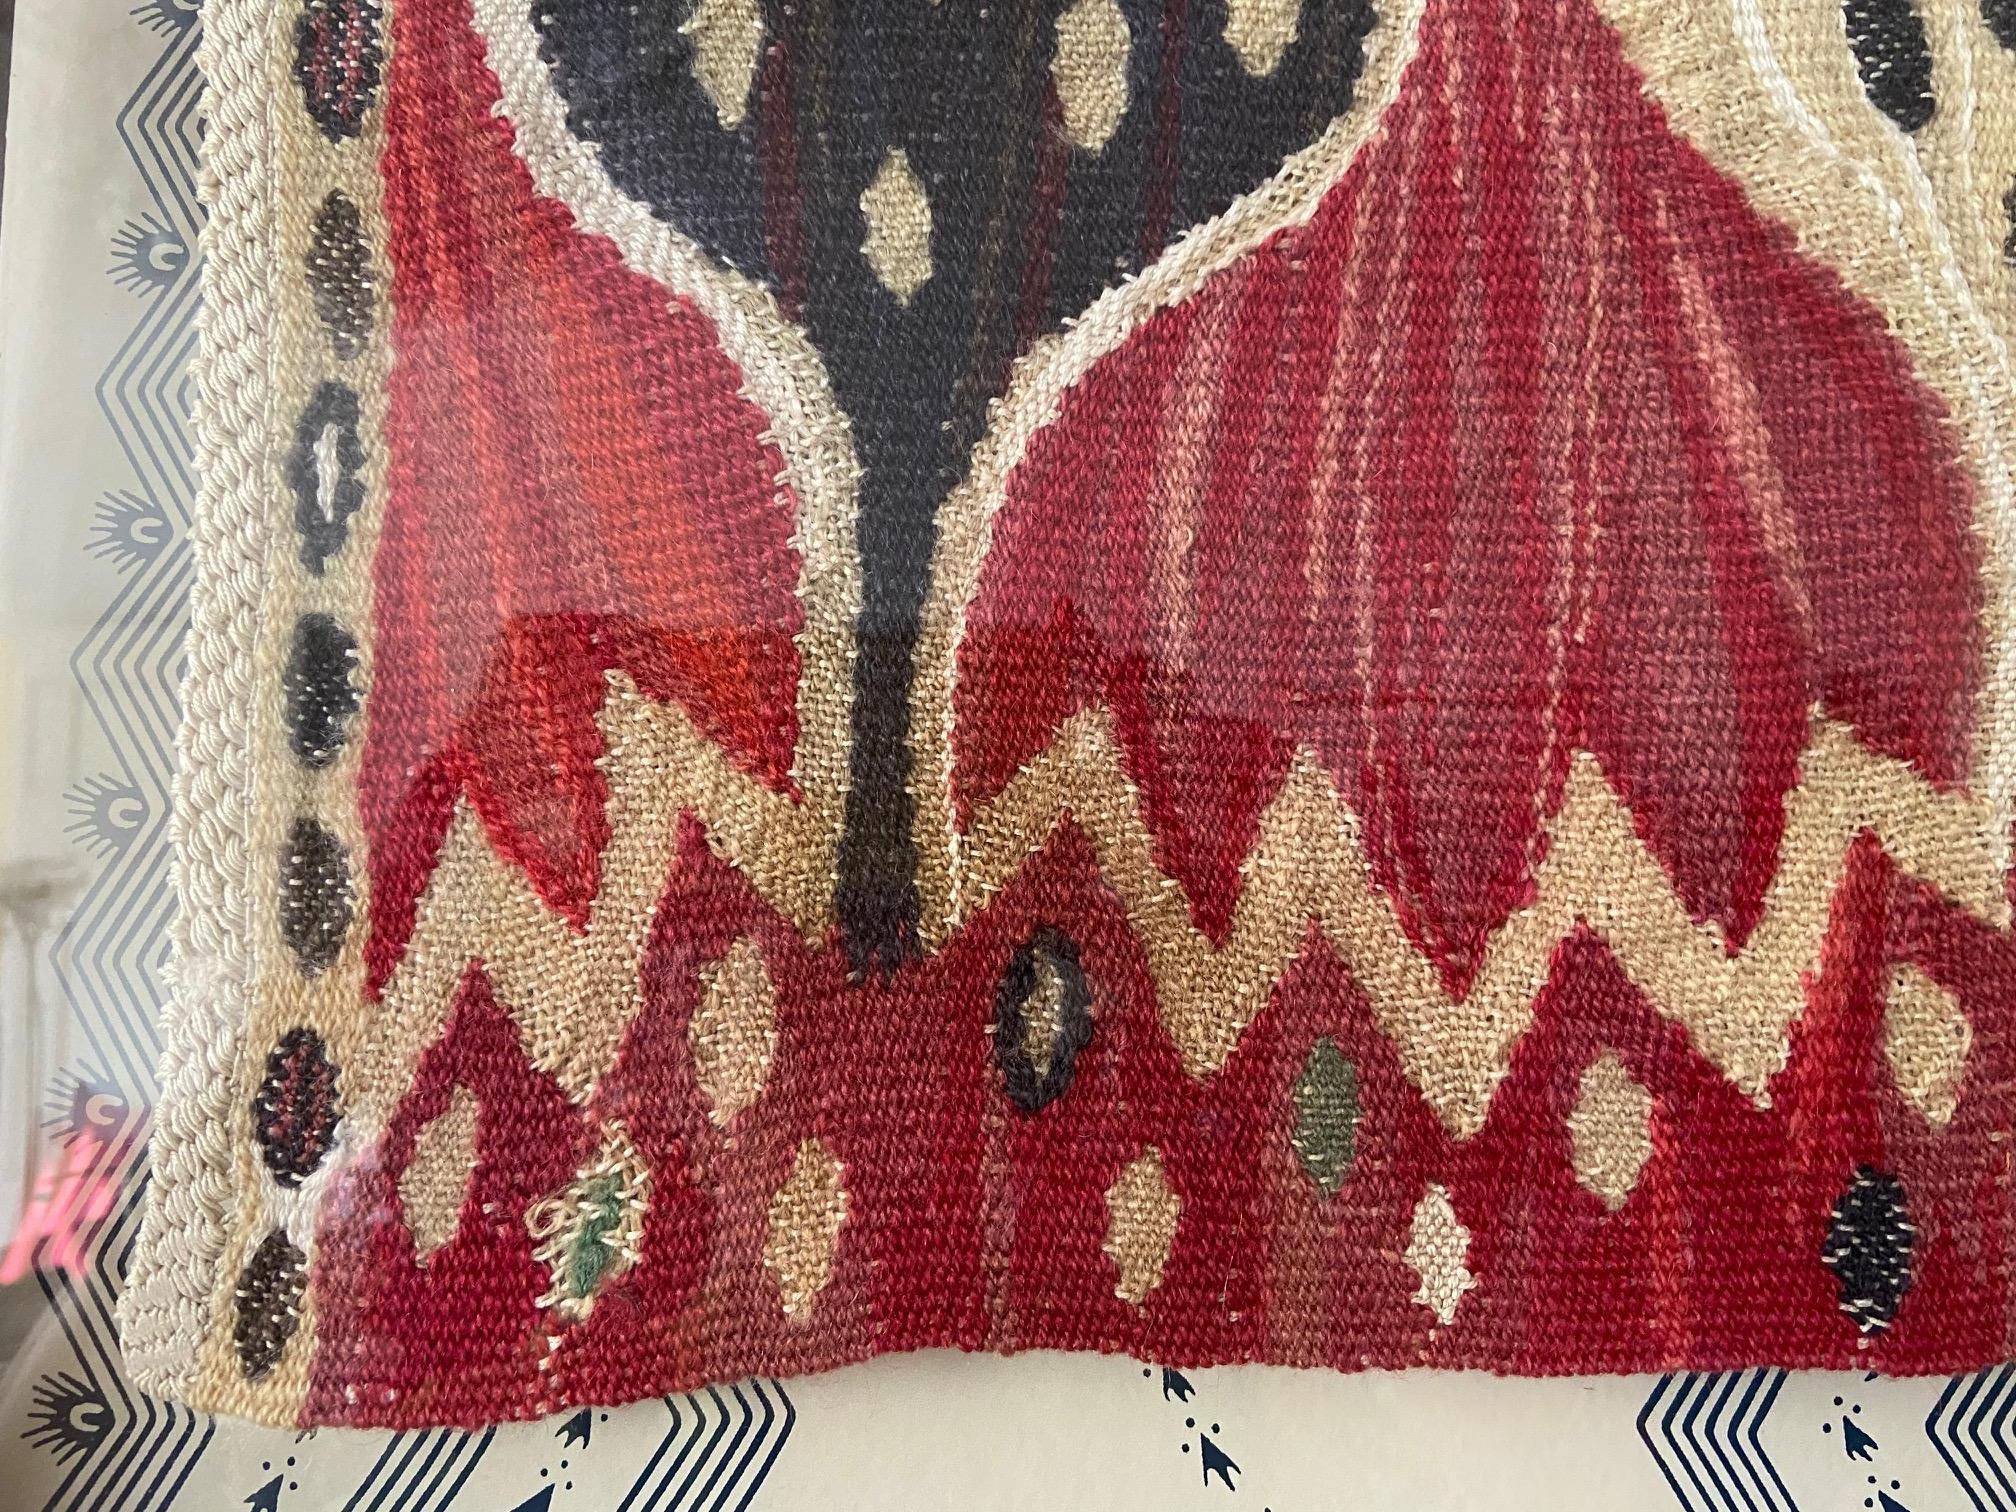 Mid-20th Century Ann-Mari Forsberg & Märta Måås-Fjetterström “Crocus, Red” Tapestry, Sweden 1945